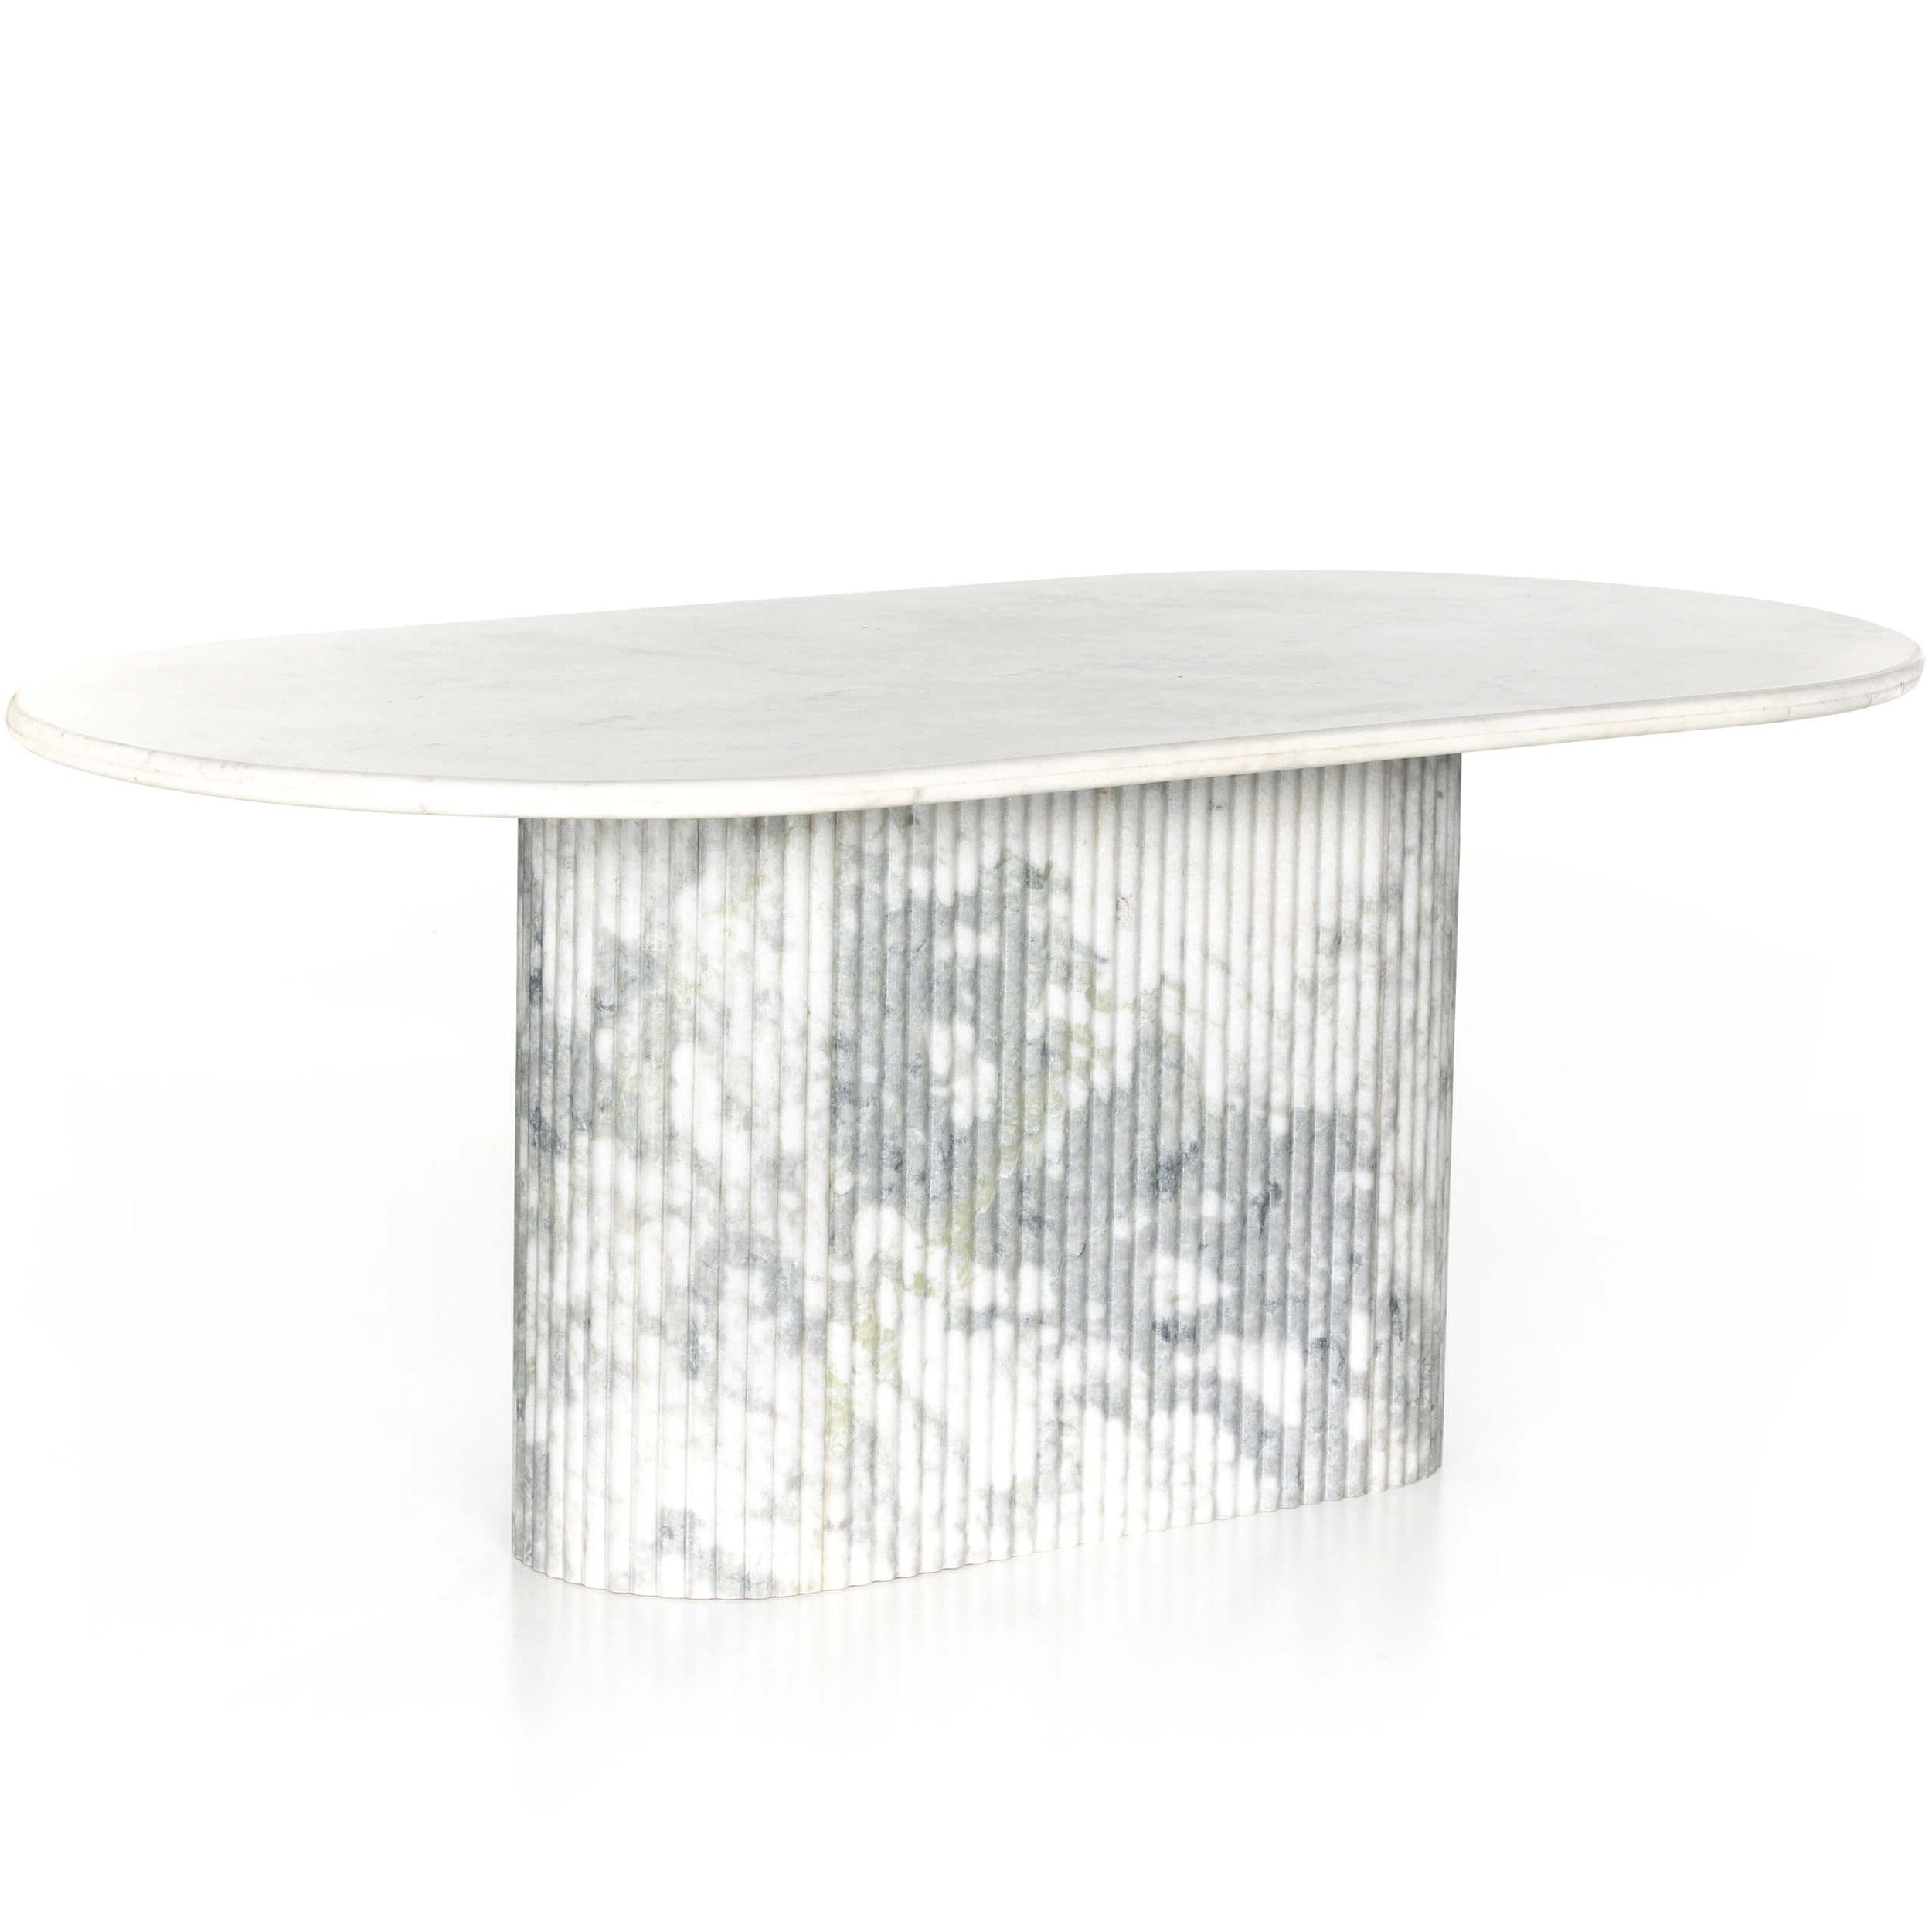 Image of Oranda Dining Table, White Marble